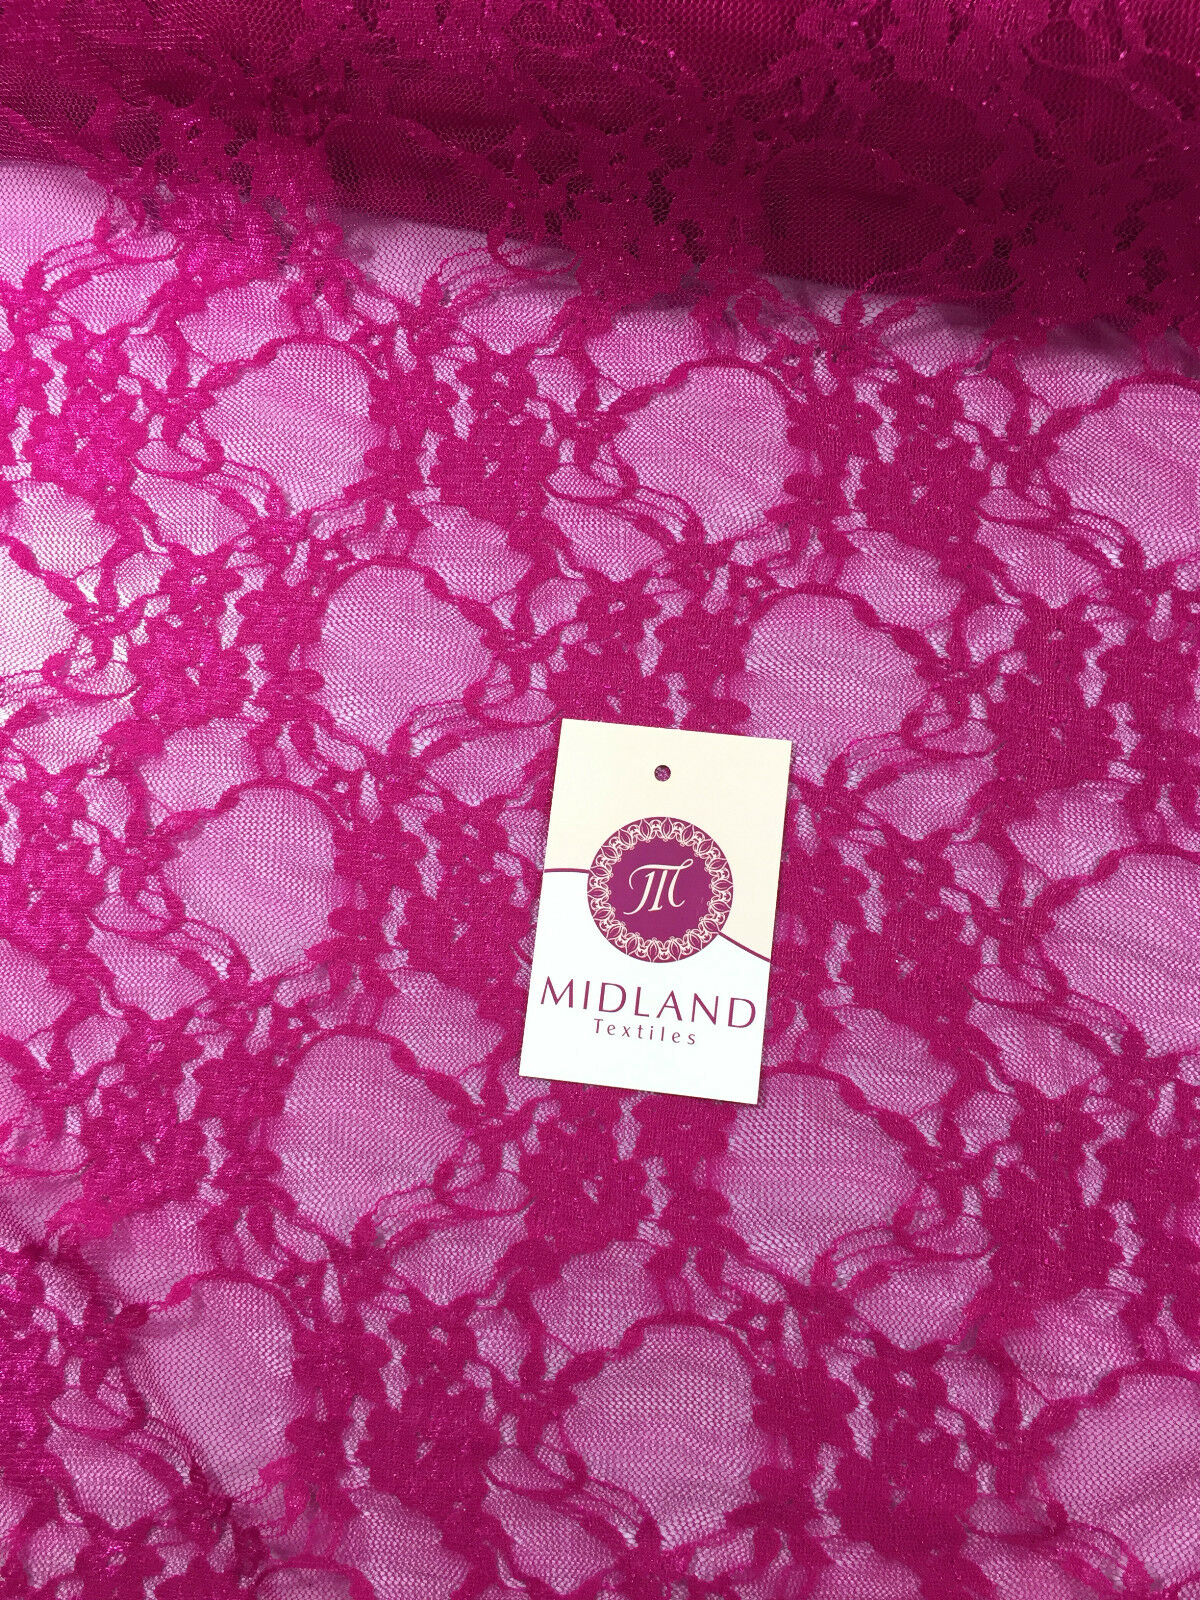 Floral Cersie Pink Lace Mesh Semi Transparent Dress fabric 58" Wide M186-17 Mtex